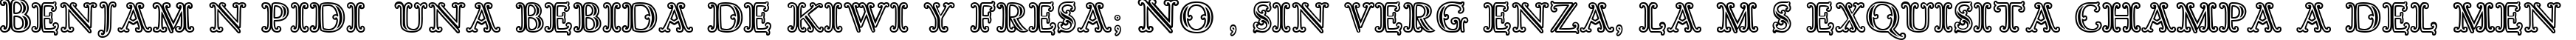 Пример написания шрифтом Goudy Decor InitialC текста на испанском